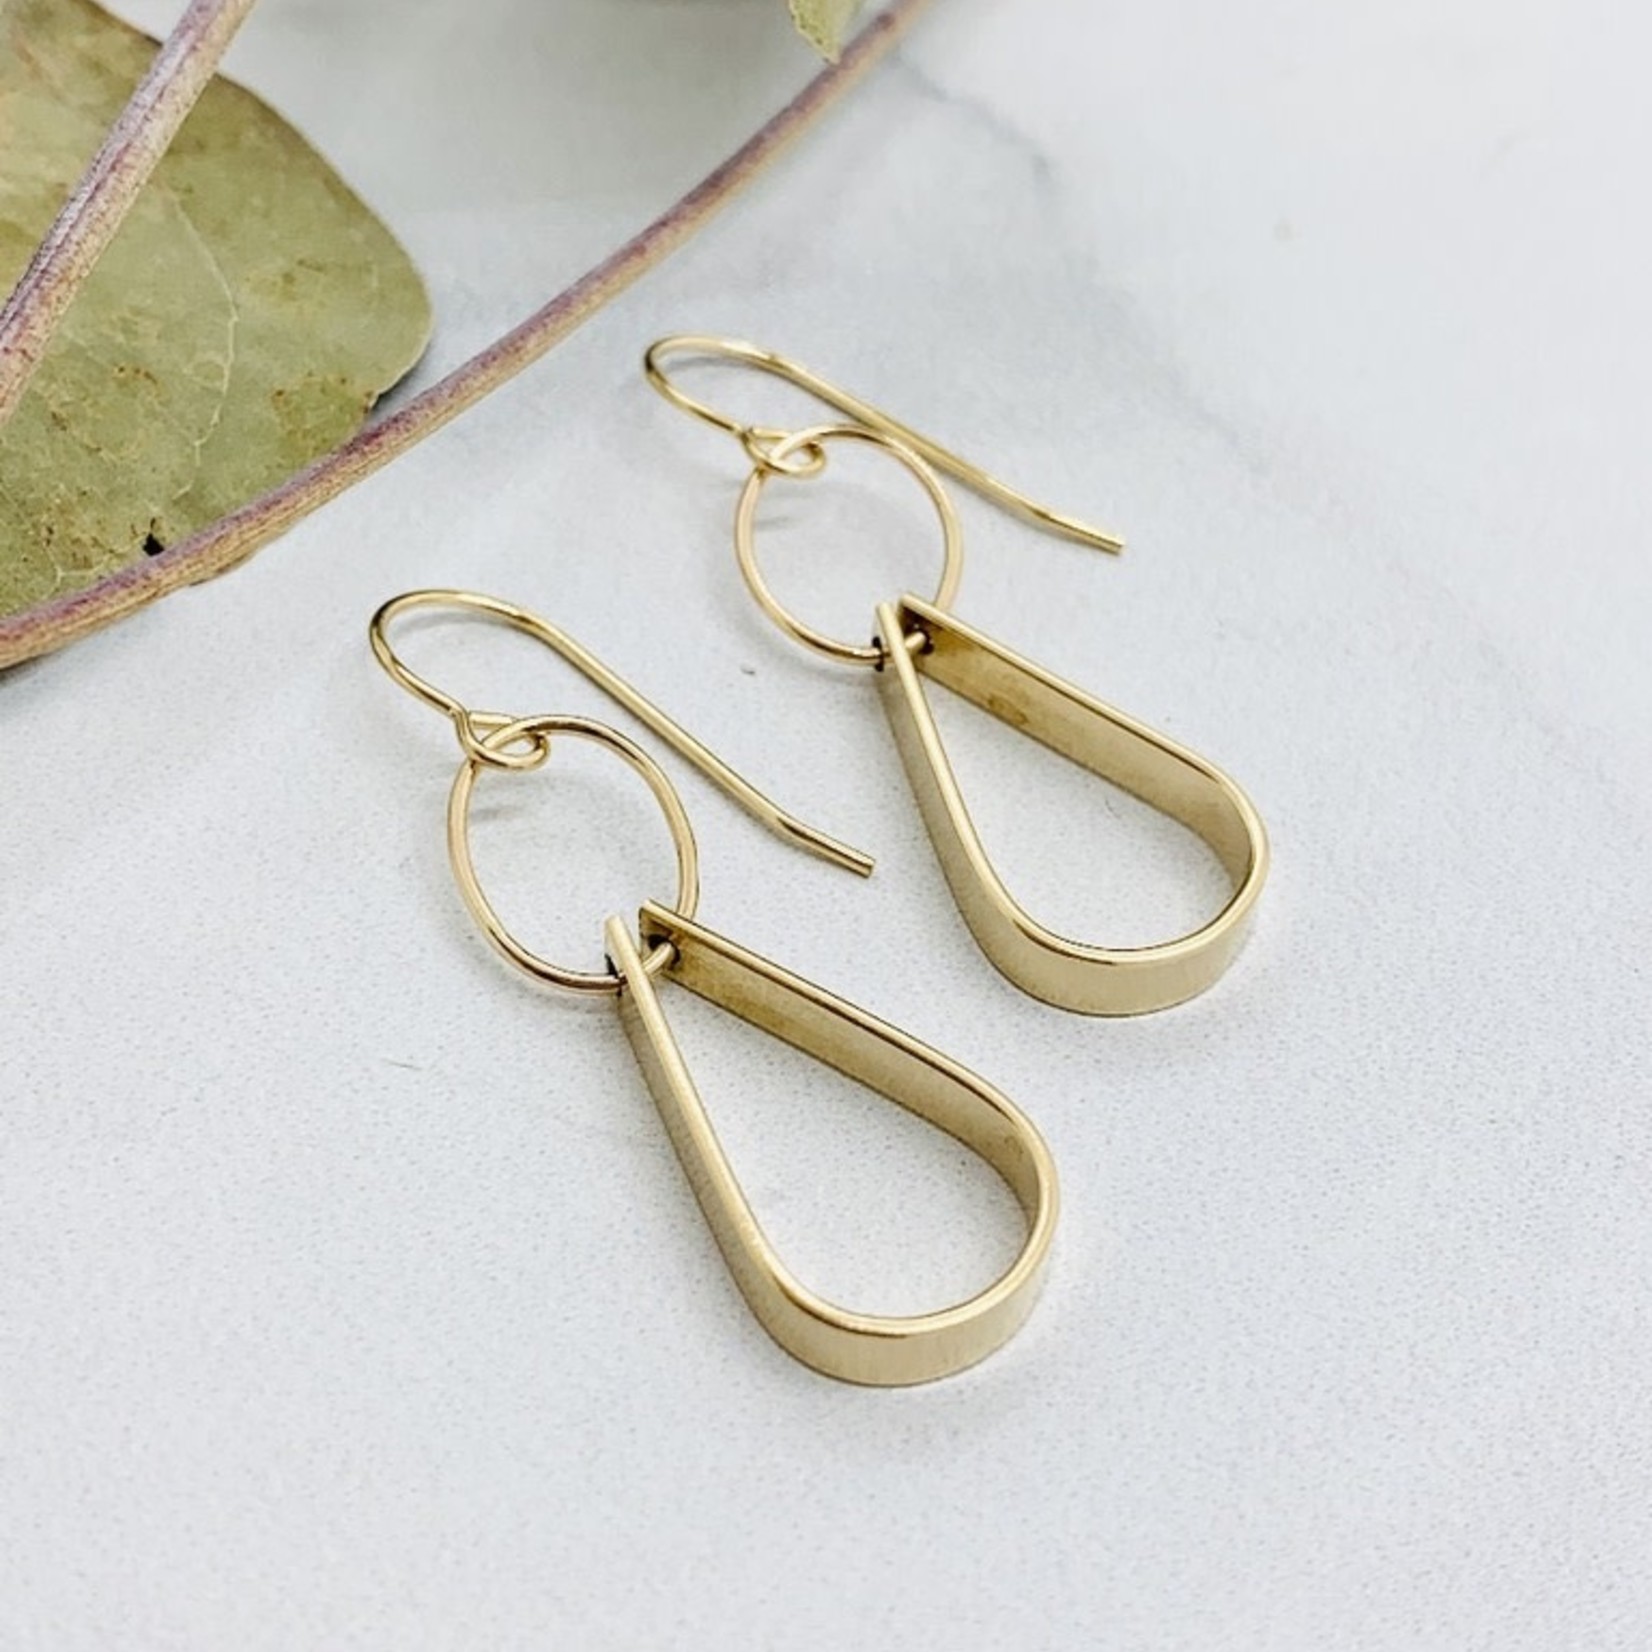 Handmade 14kt Gold Filled Double Drop Earring